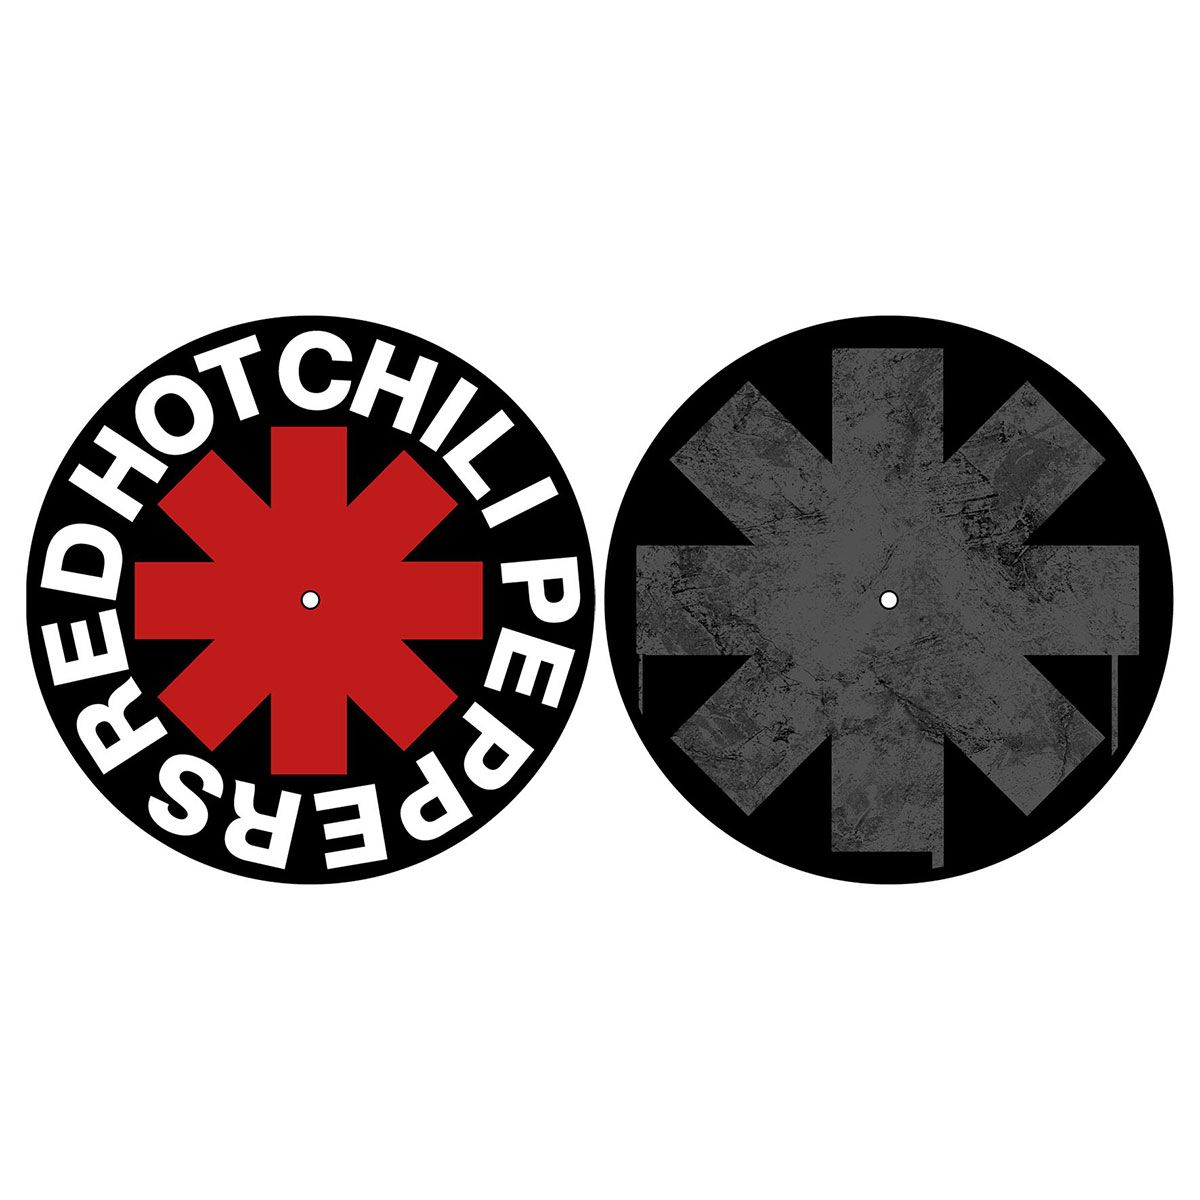 Lot de 2 Feutrines Vinyles RED HOT CHILI PEPPERS - Asterisk - Rock